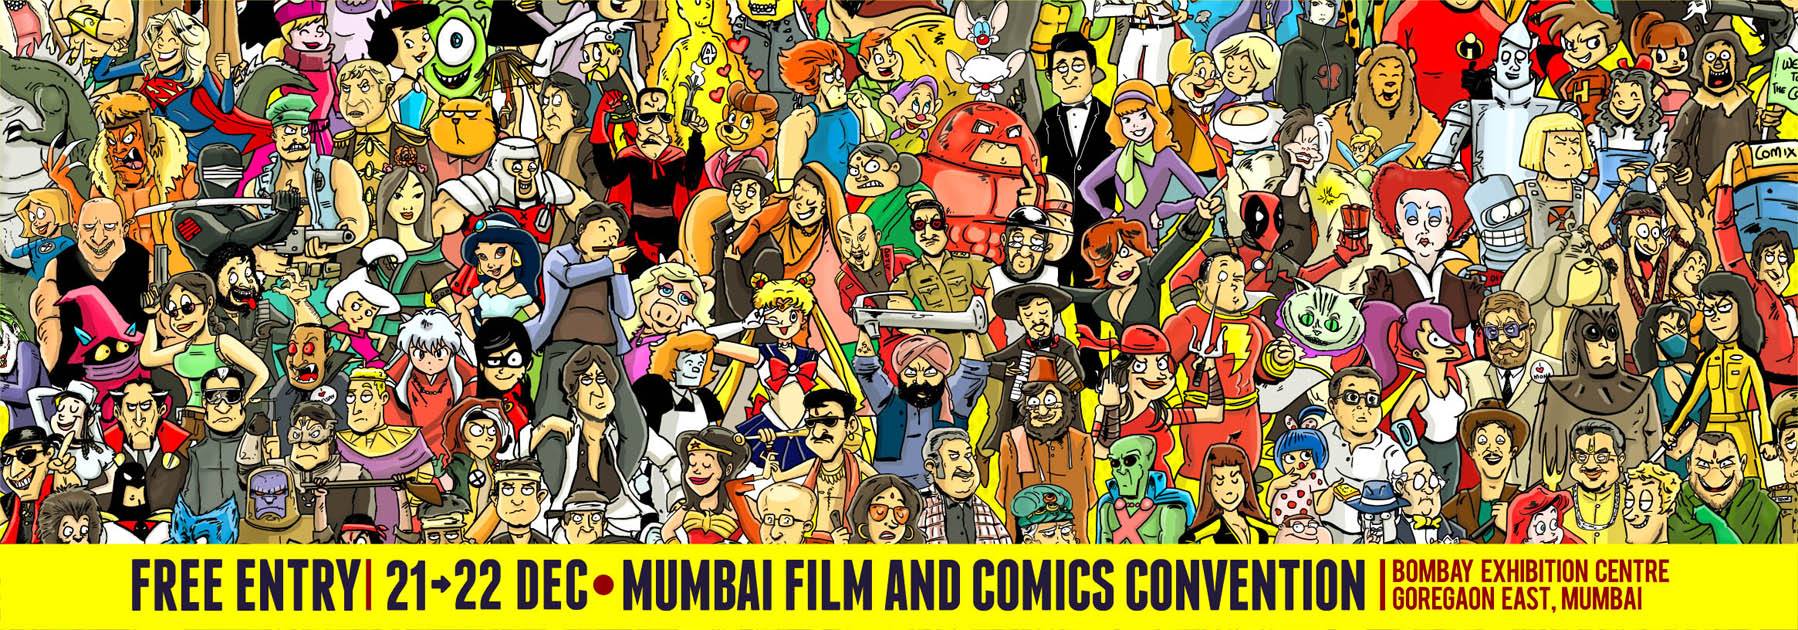 Mumbai Film & Comics Convention 2013! @ Bombay Convention & Exhibition Centre